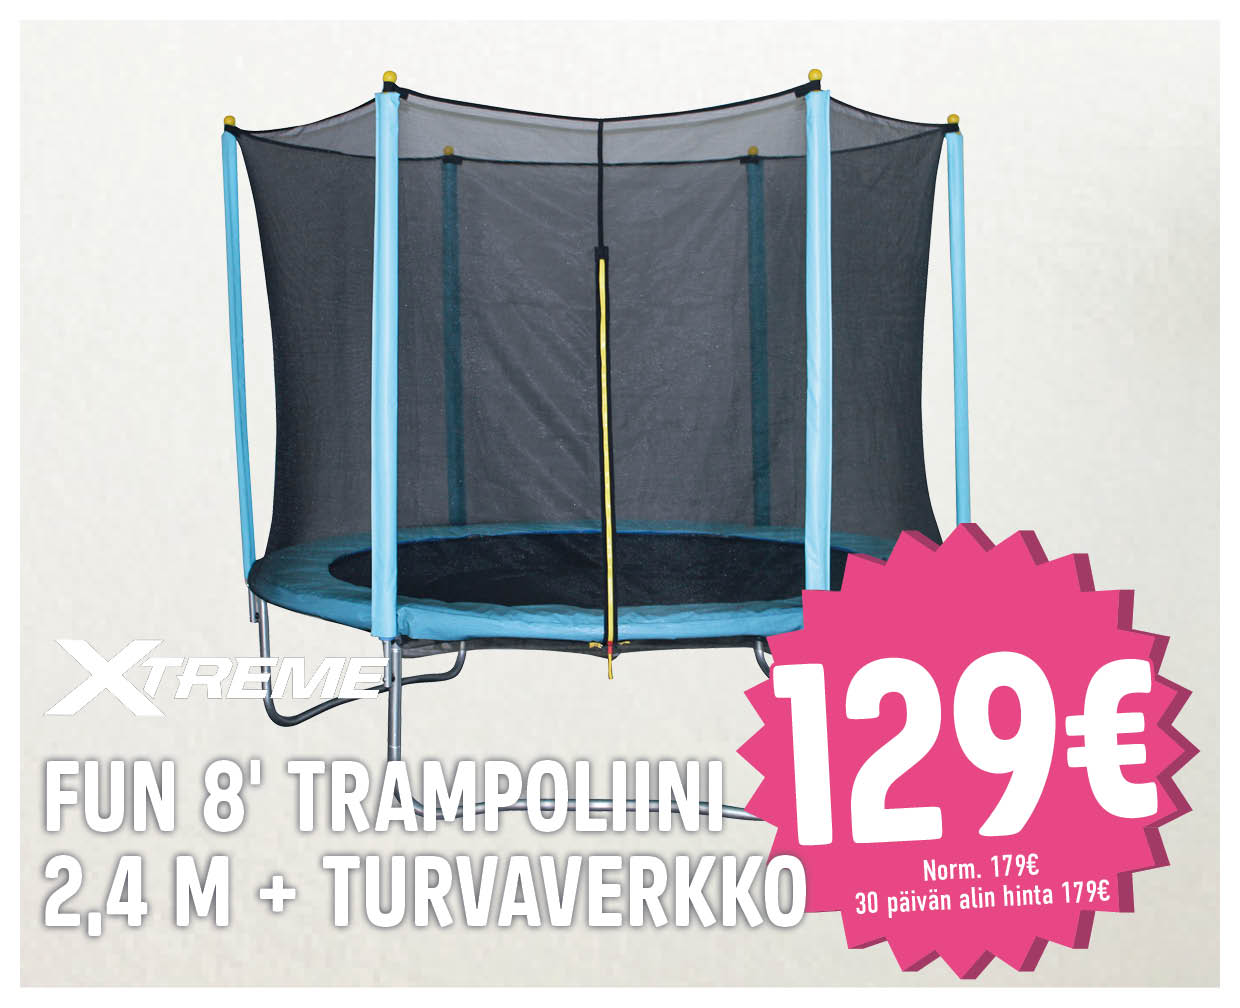 Boksi 2 trampoliini